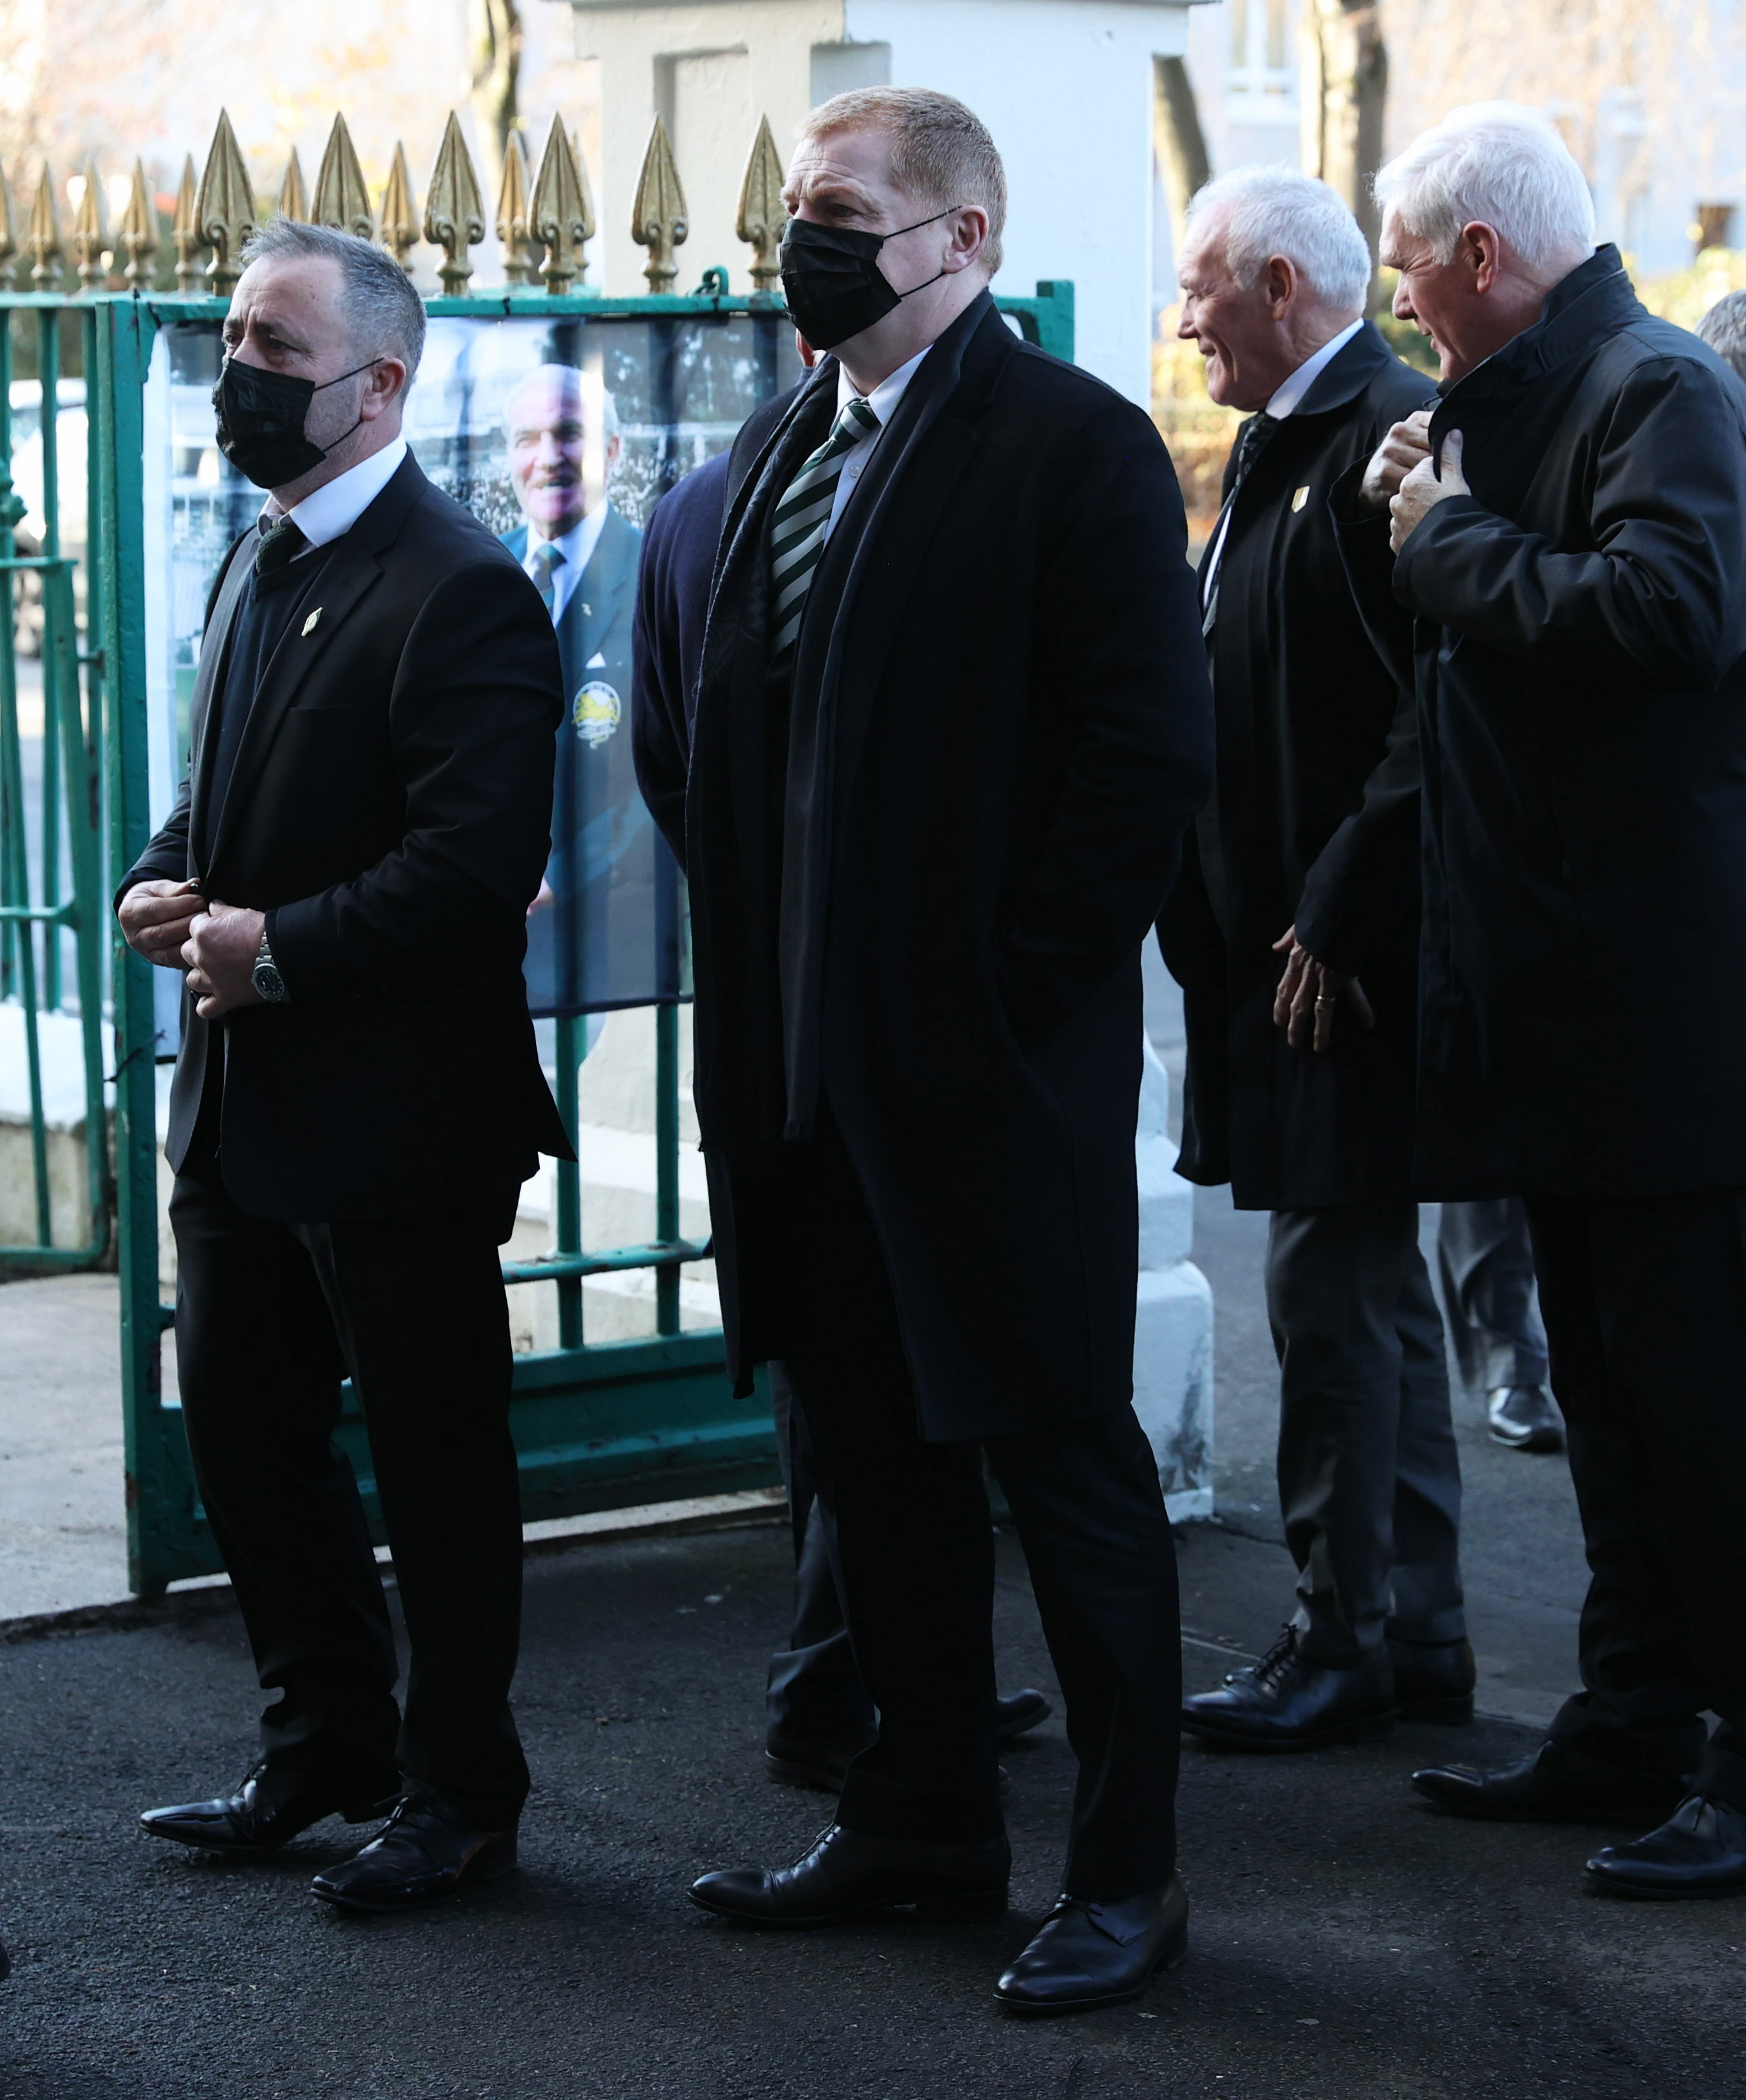 Neil Lennon arrives at the funeral of former Celtic player Bertie Auld.